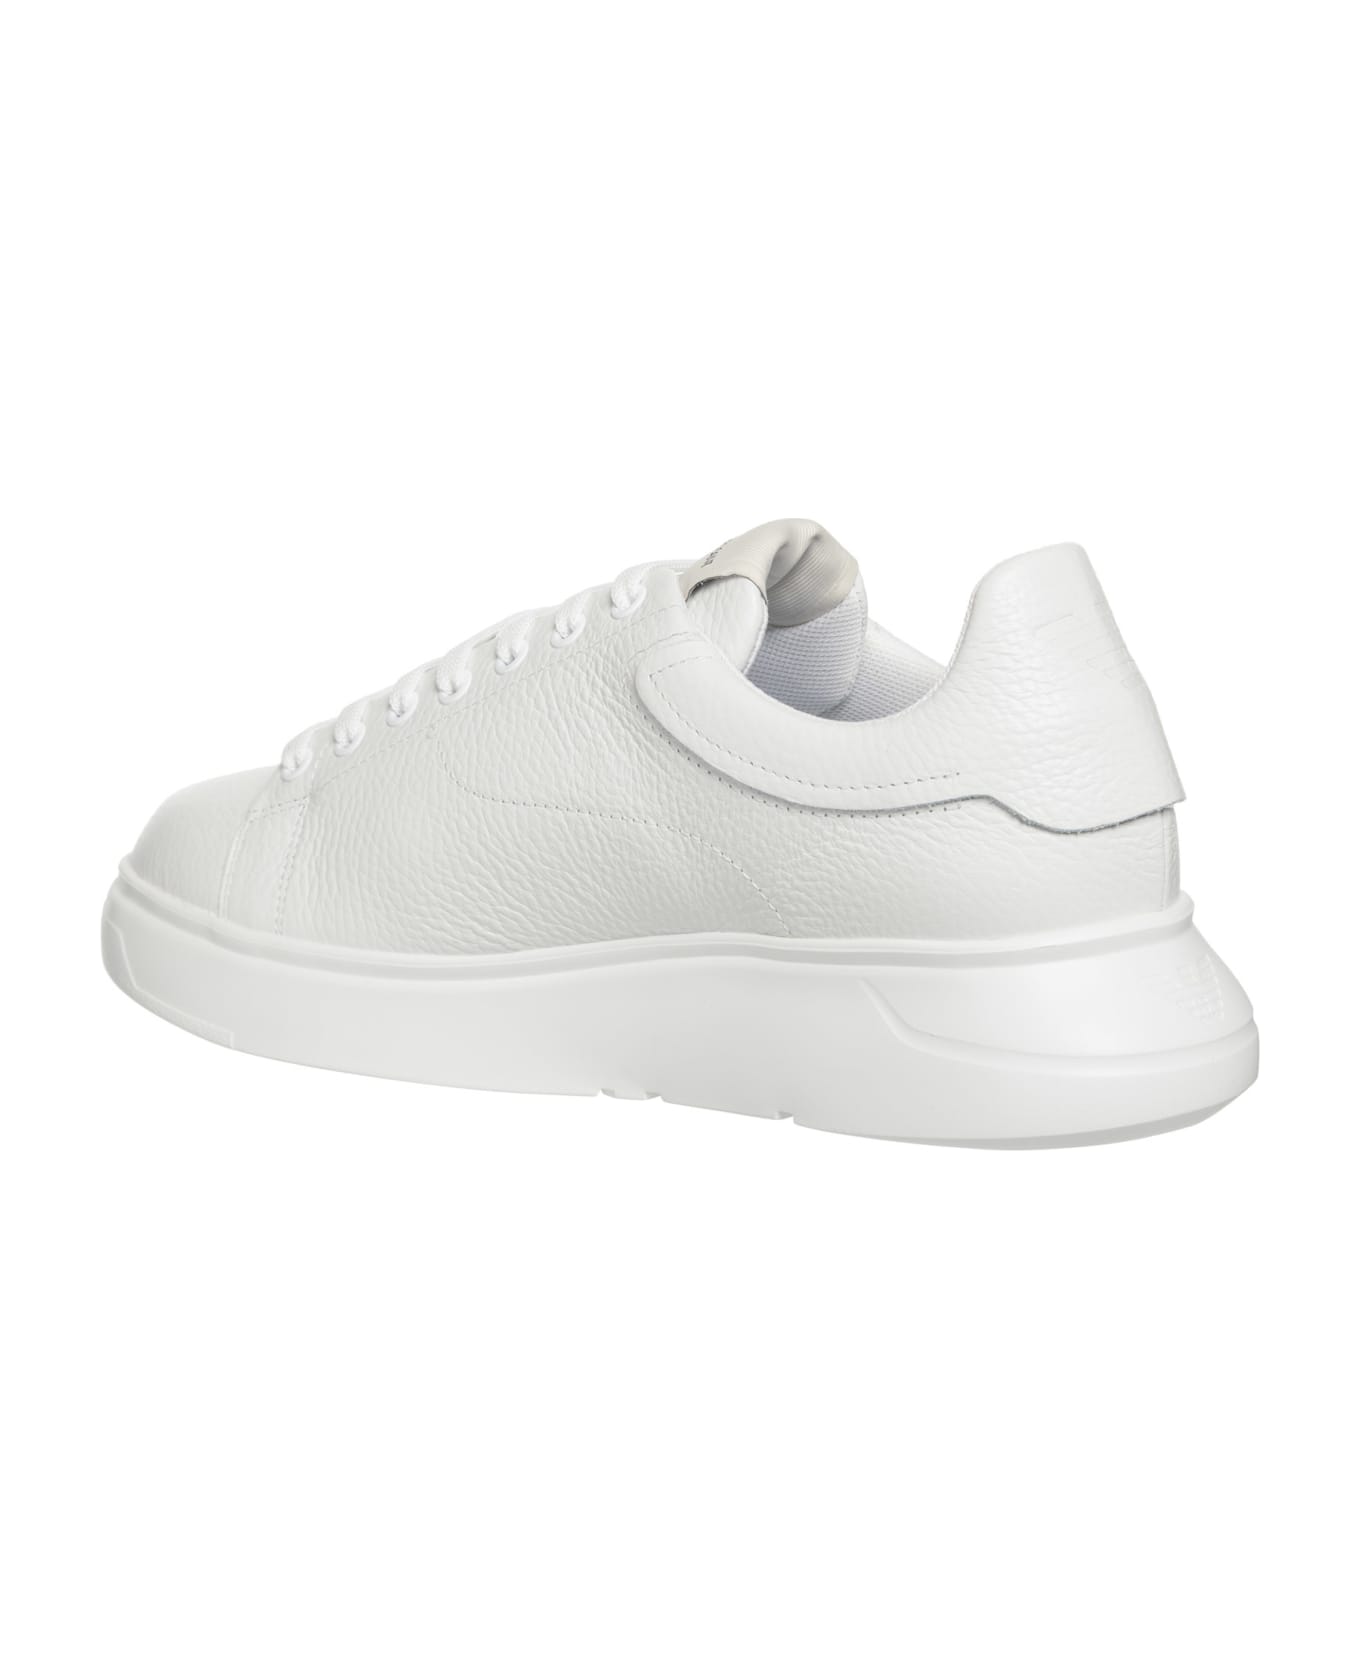 Emporio Armani Leather Sneakers - White